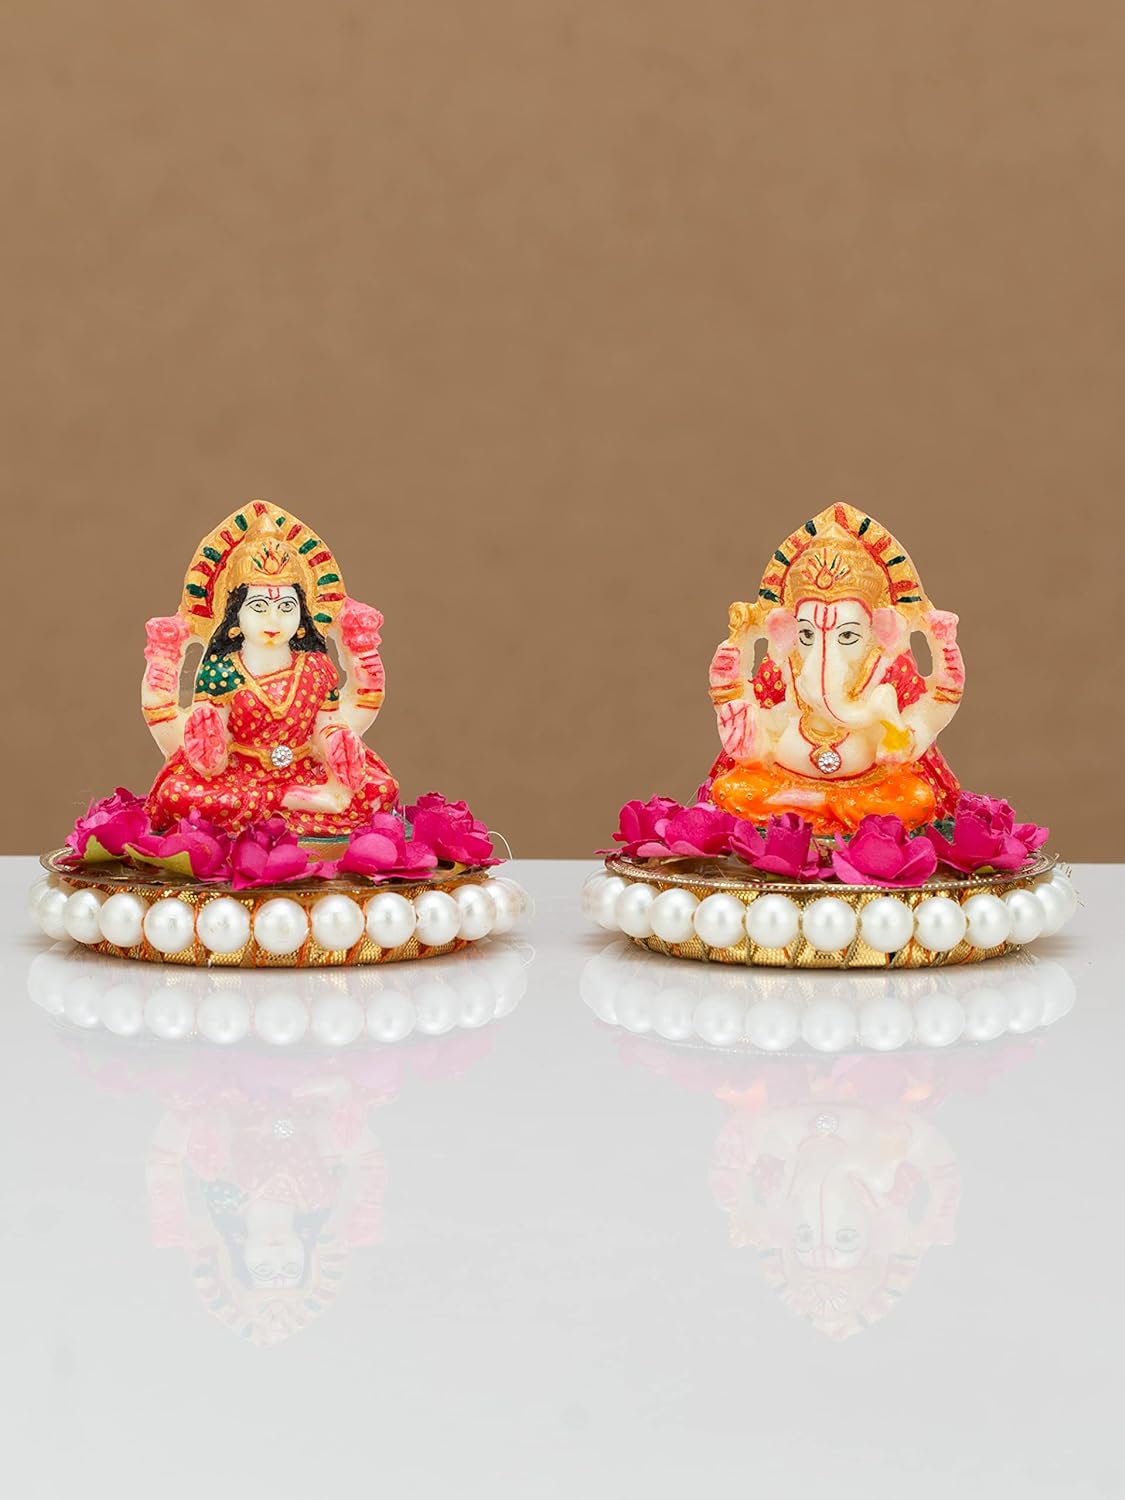 Lamansh ganesh ji candle holder Laxmi Ganeshji 🙏🕉 Decorative Showpiece with Artificial flowers for Navratri, Diwali & Ganesh Chaturthi